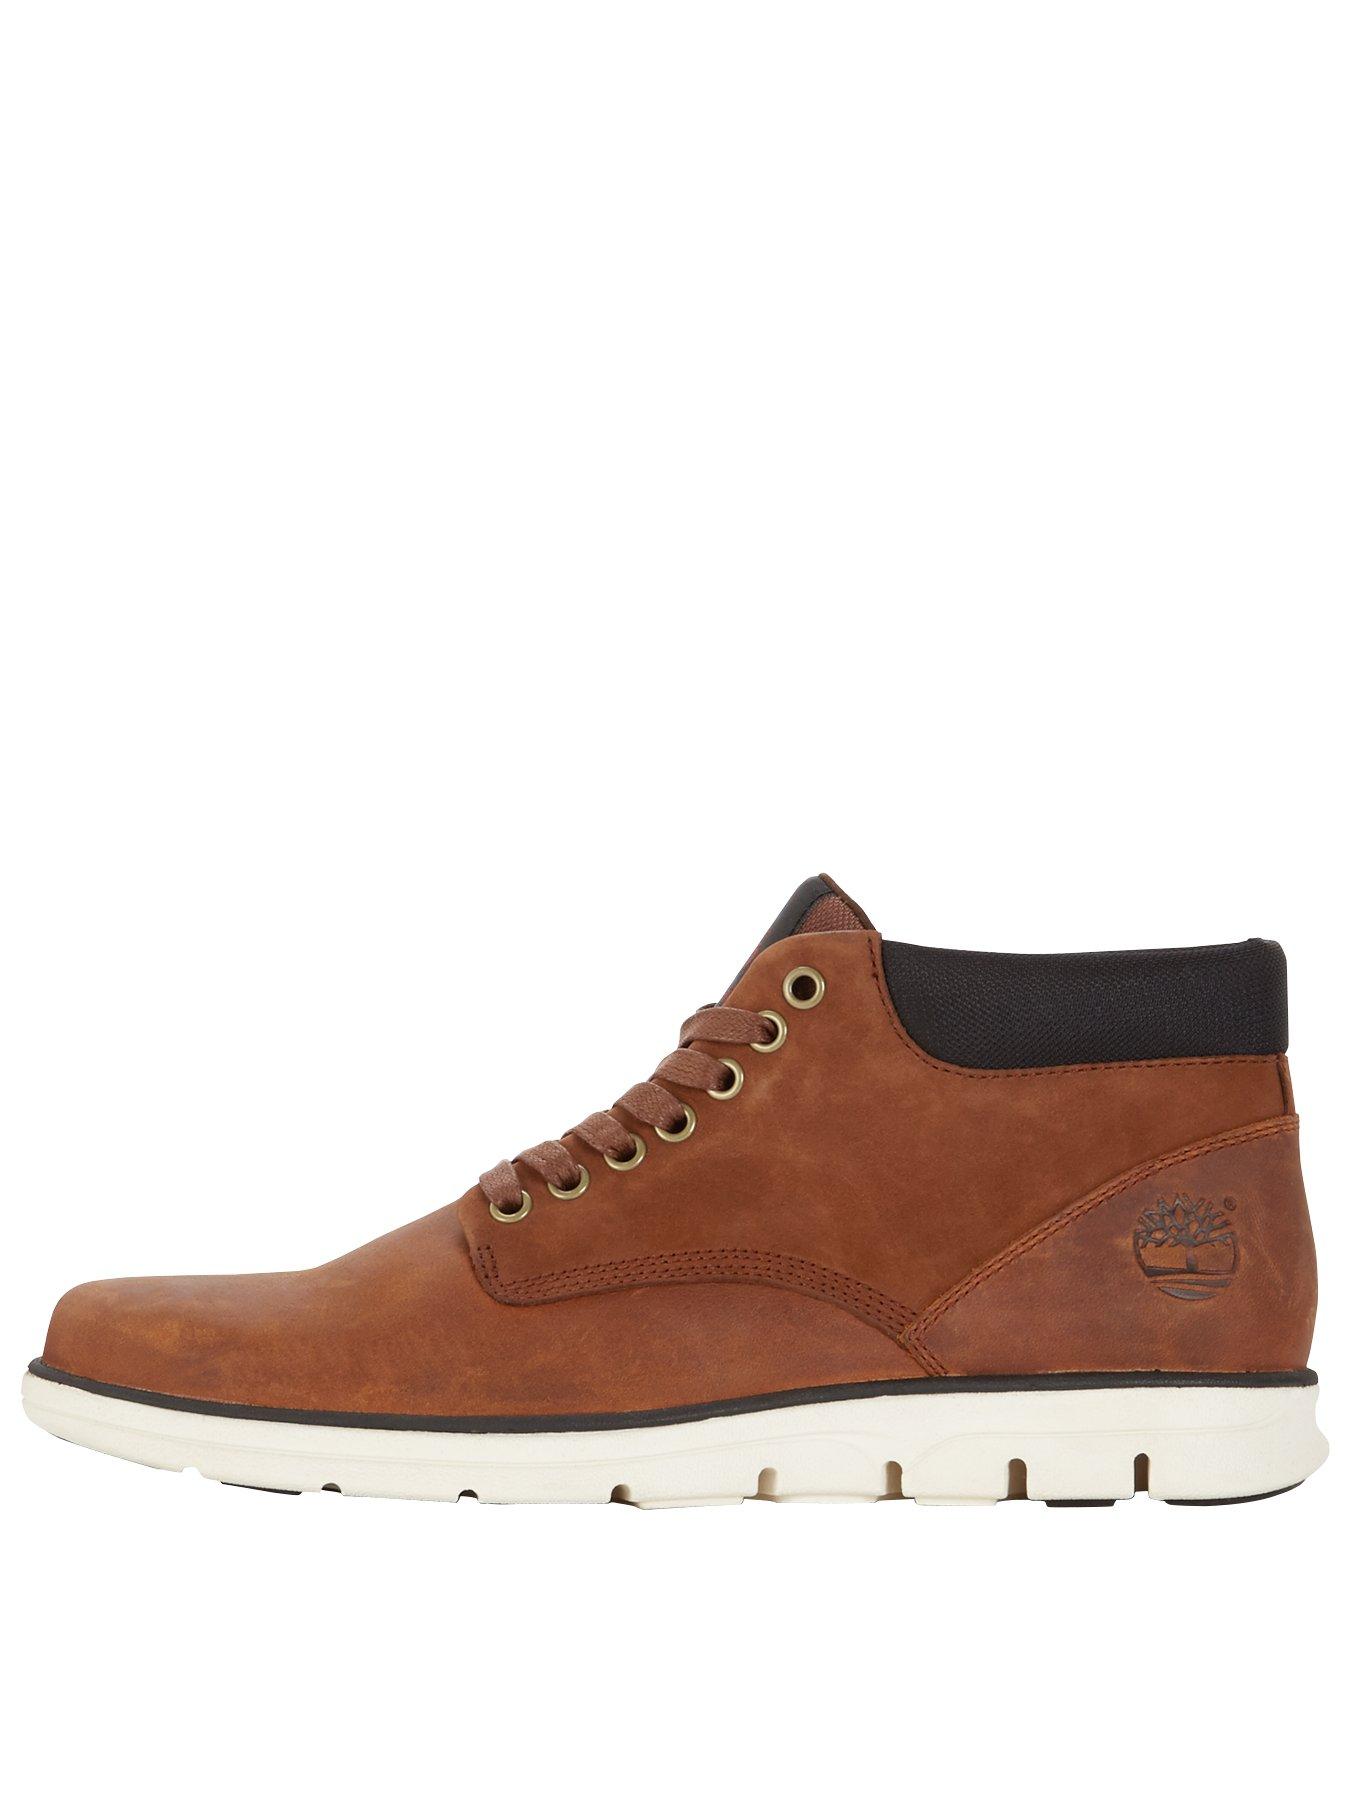 Timberland Bradstreet Leather Chukka Boots - Brown | Very.co.uk